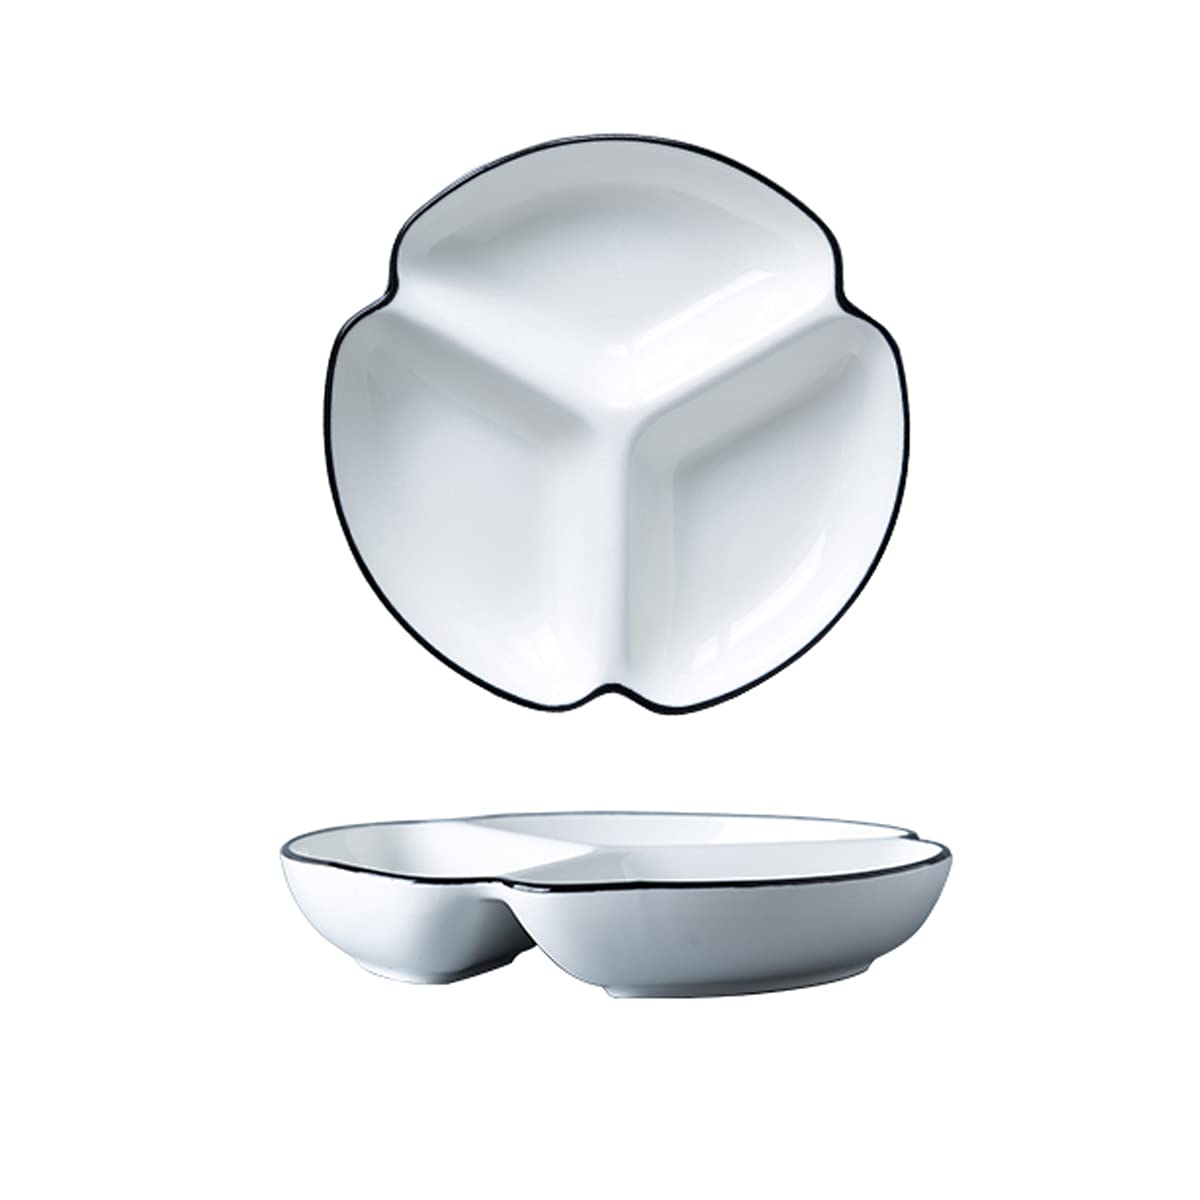 MHUI Round Ceramic Porcelain Divided Dessert Salad Plate Dinner Plate Divided Porcelain Dinner Plate Portion Control Plate for A